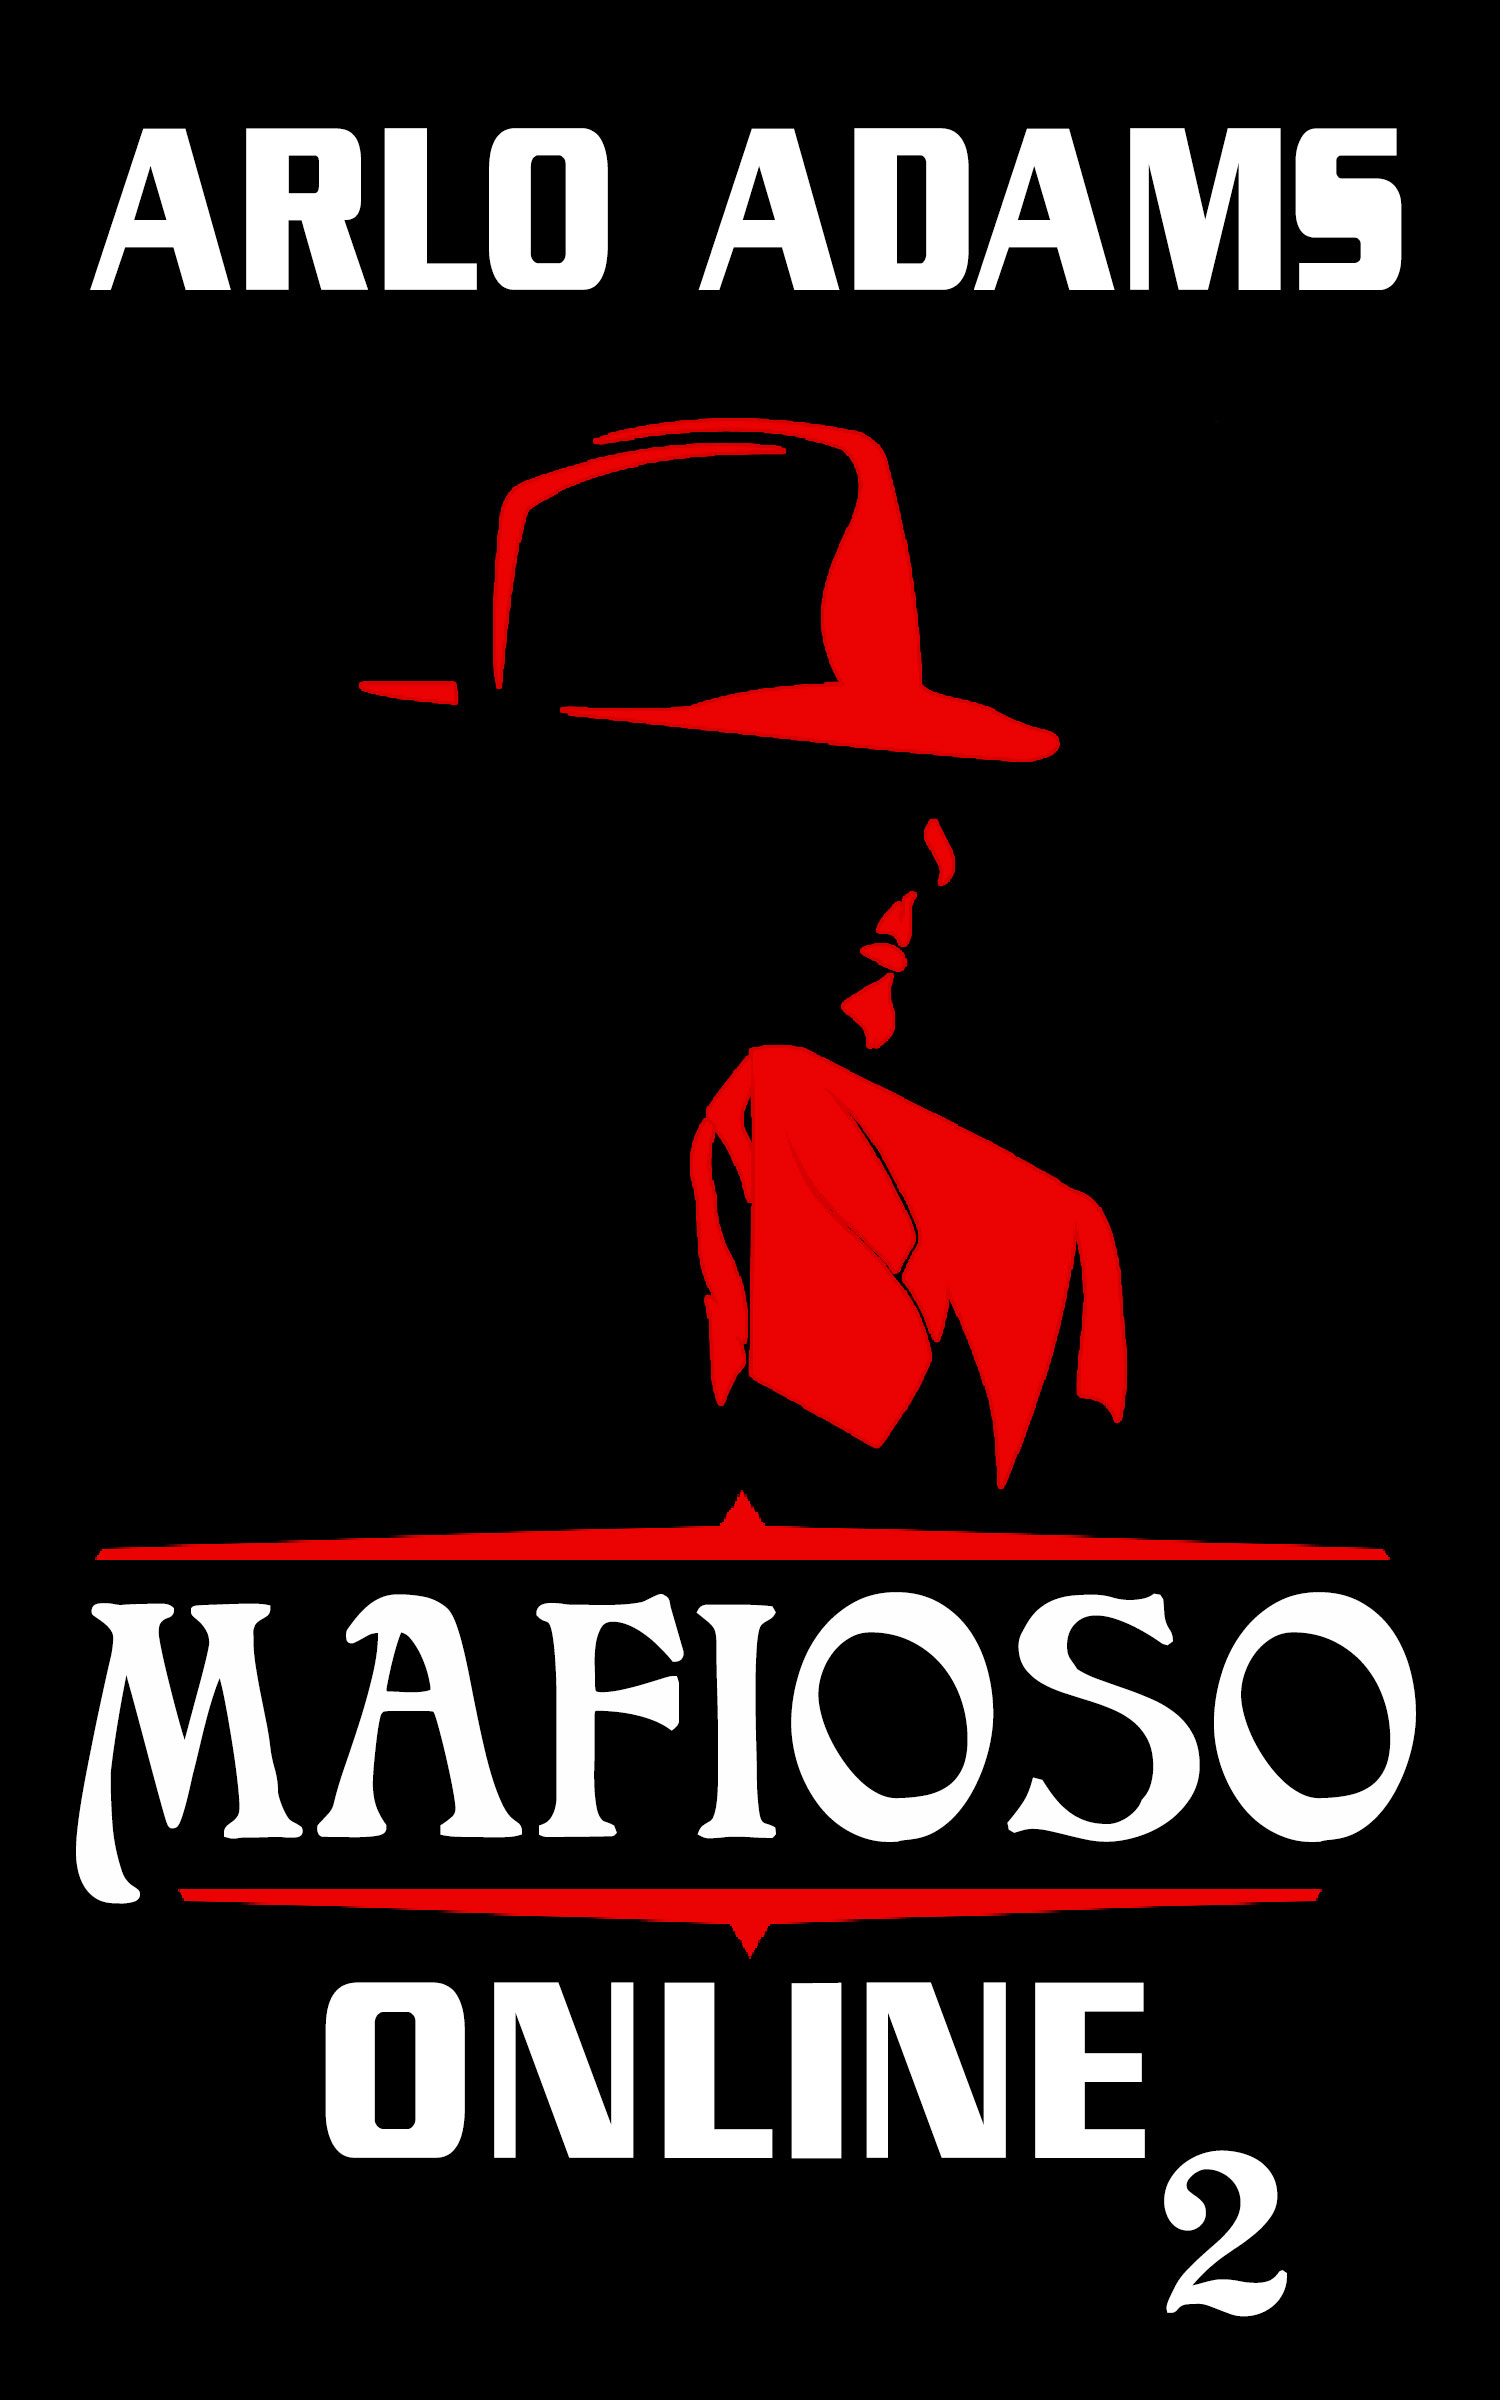 Mafioso Online 2